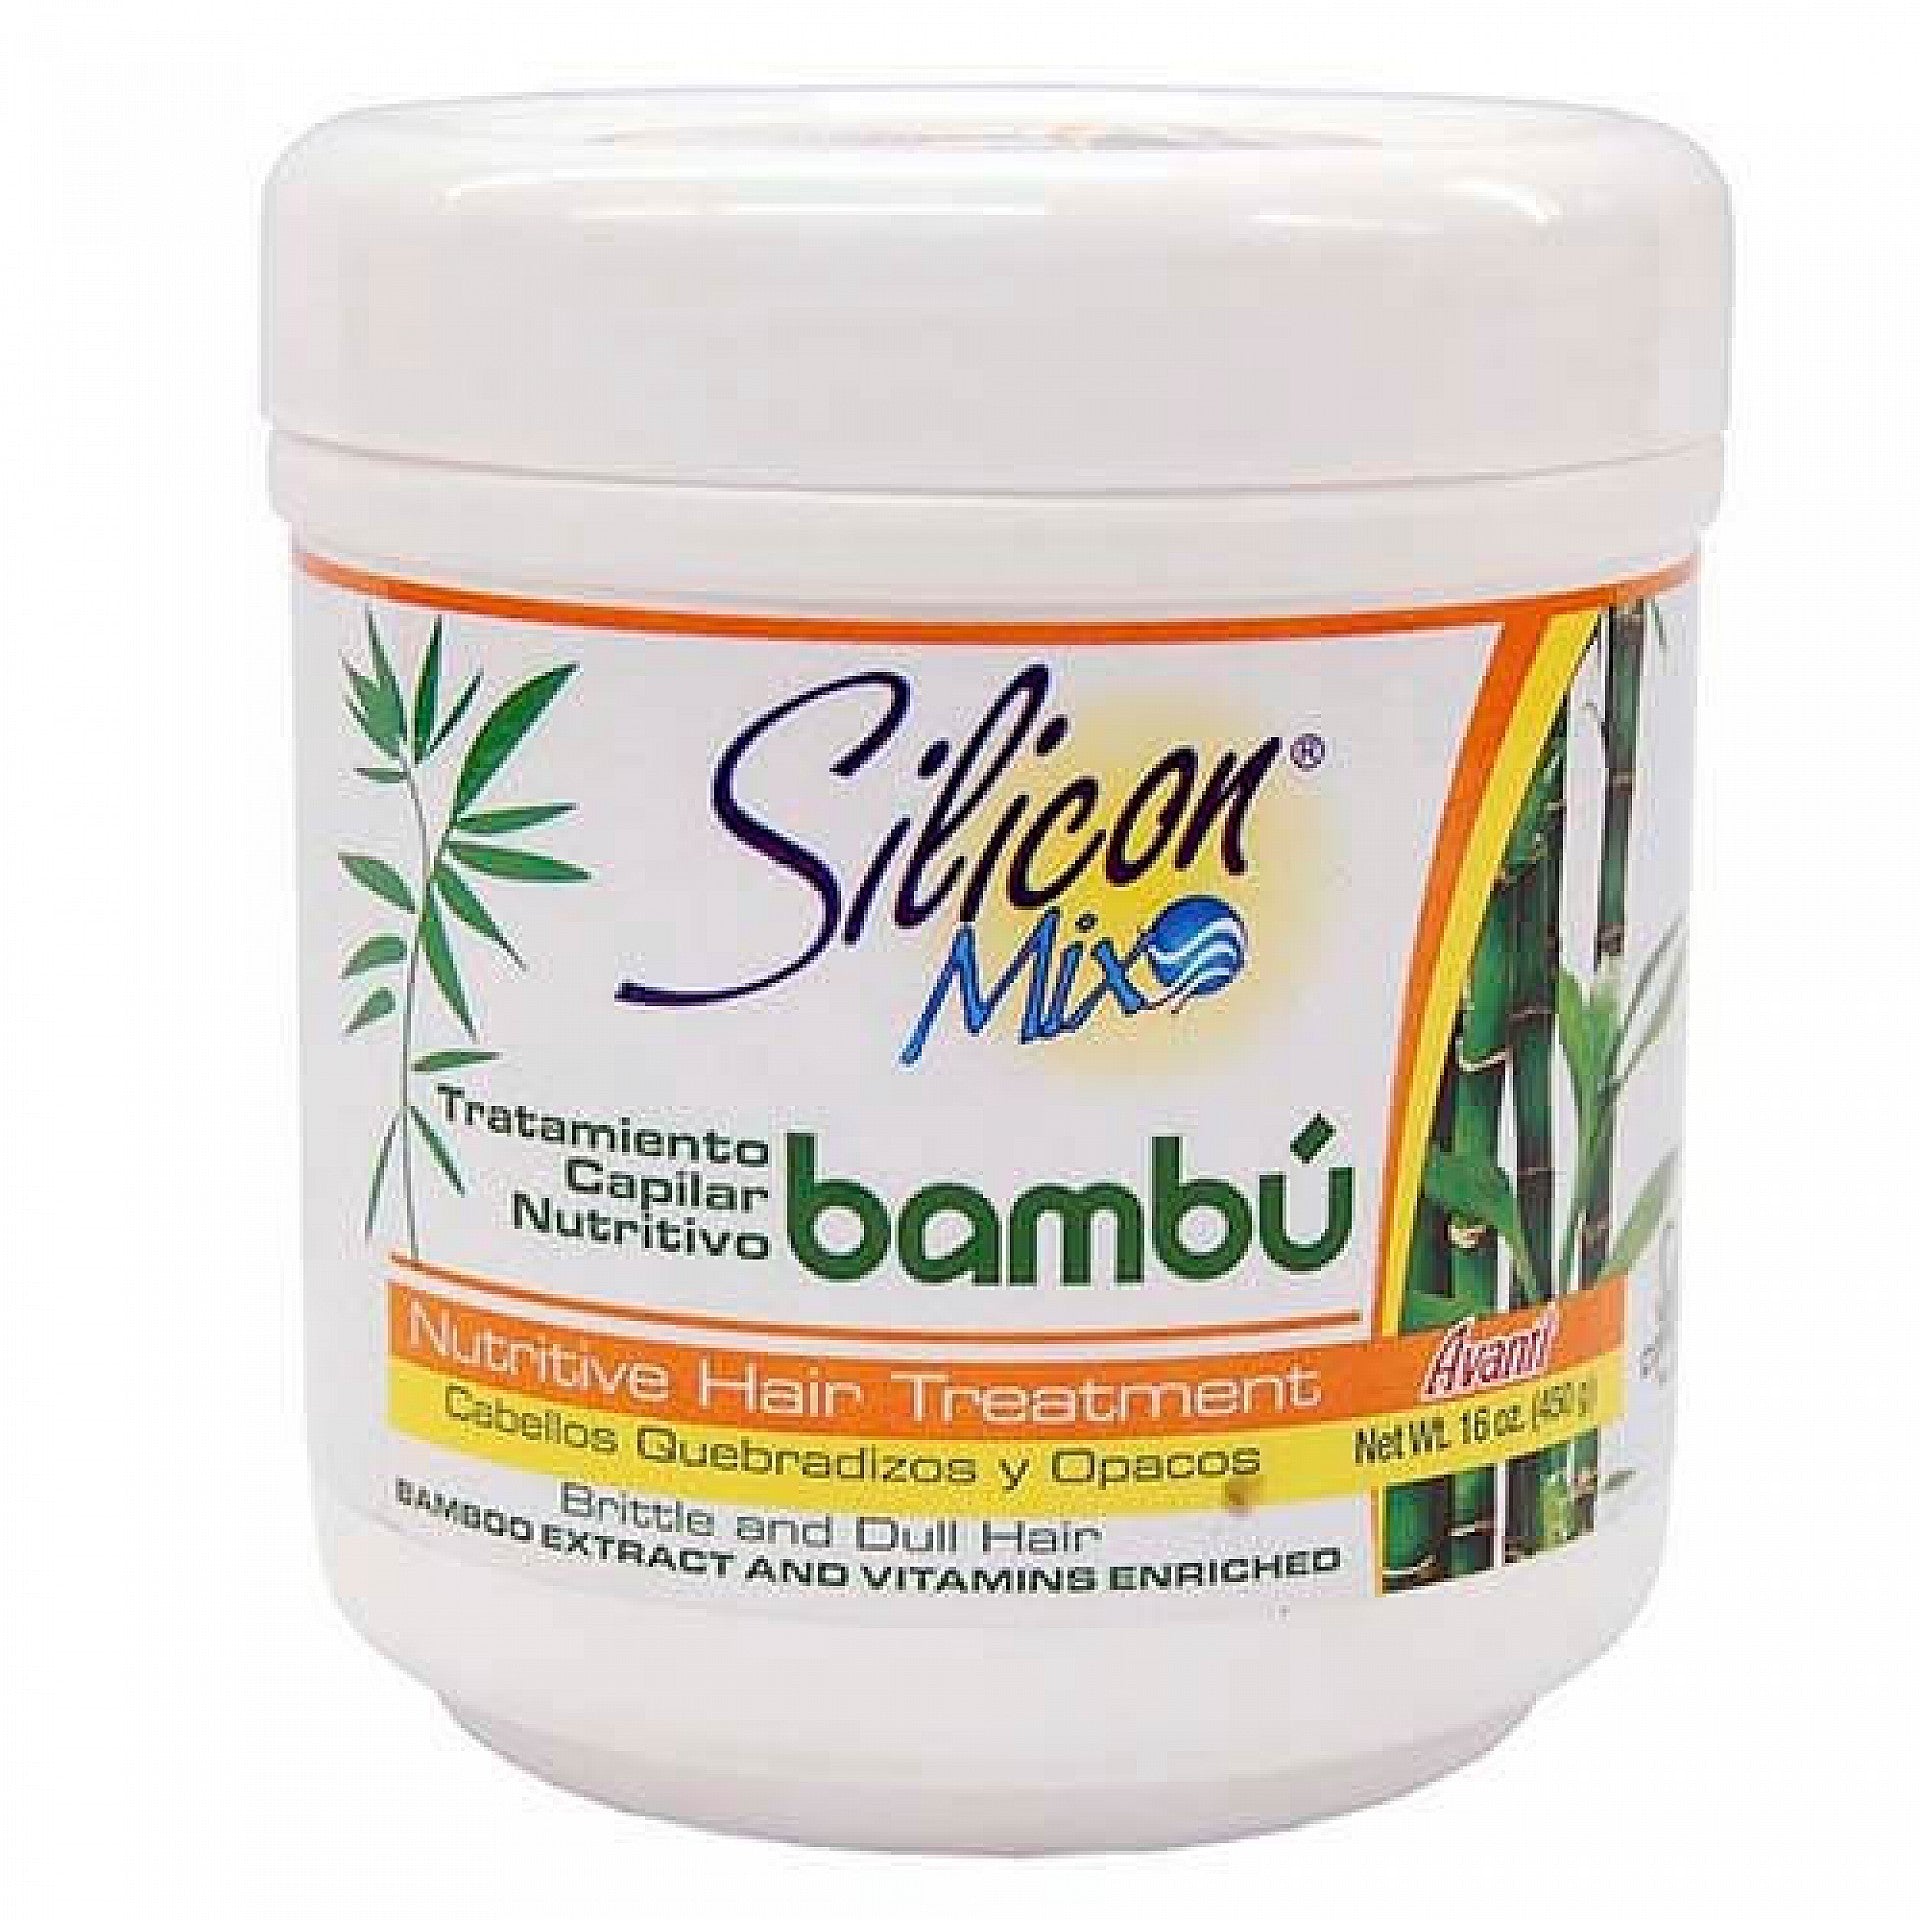 Silicon Mix Bamboo Nutritive Hair Treatment 16oz